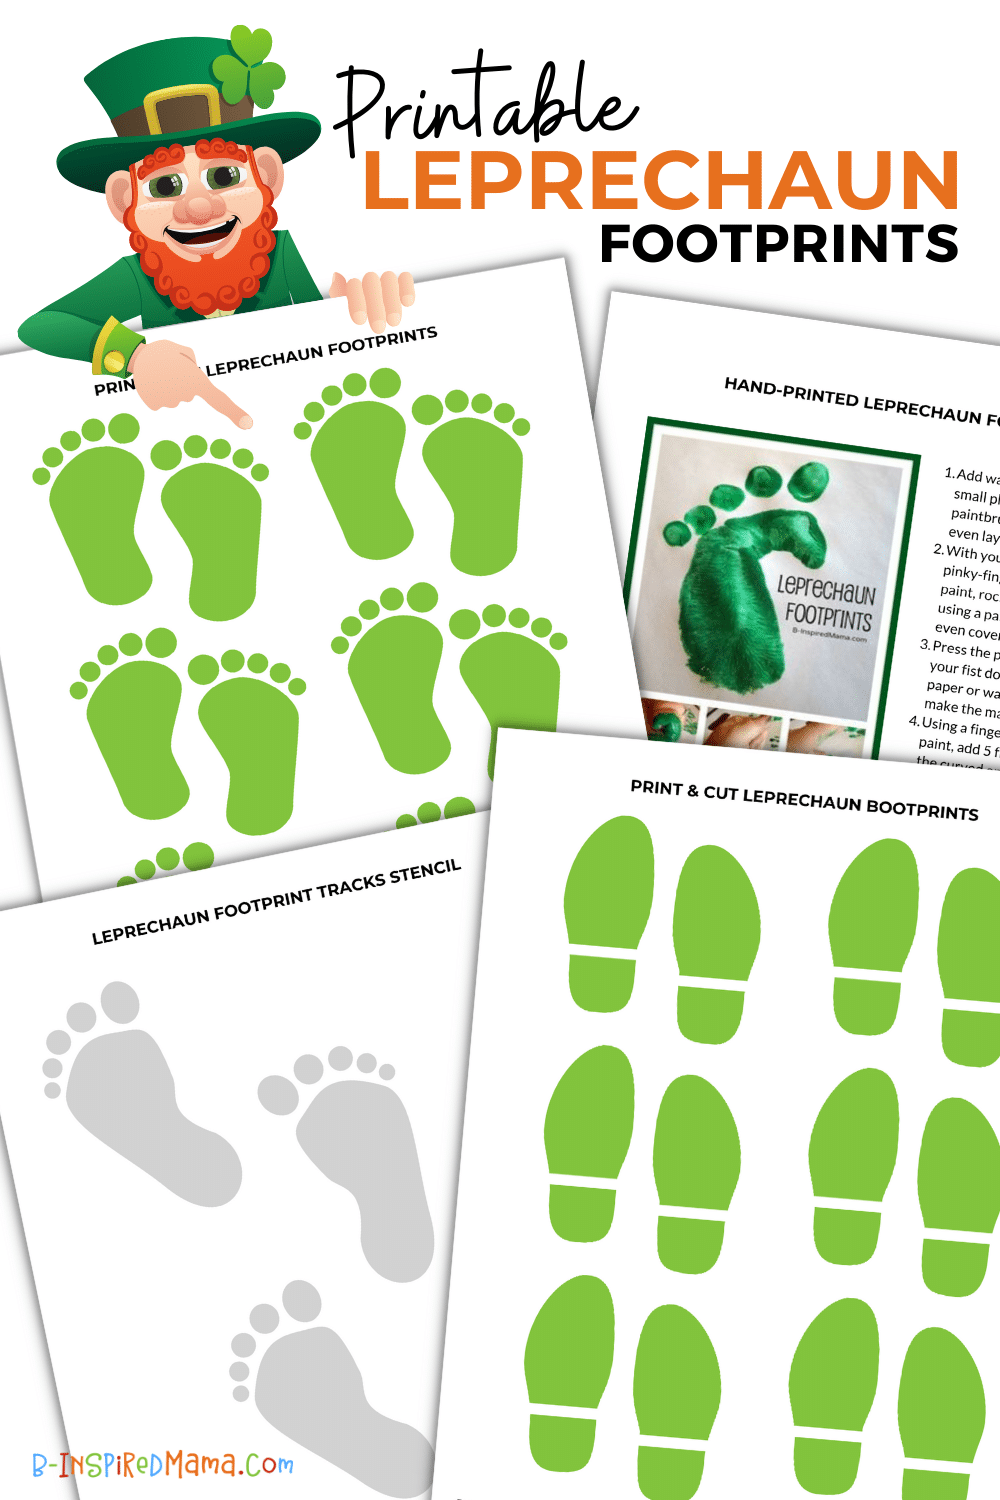 Painted Printable Leprechaun Footprints For St Patricks Day B Inspired Mama